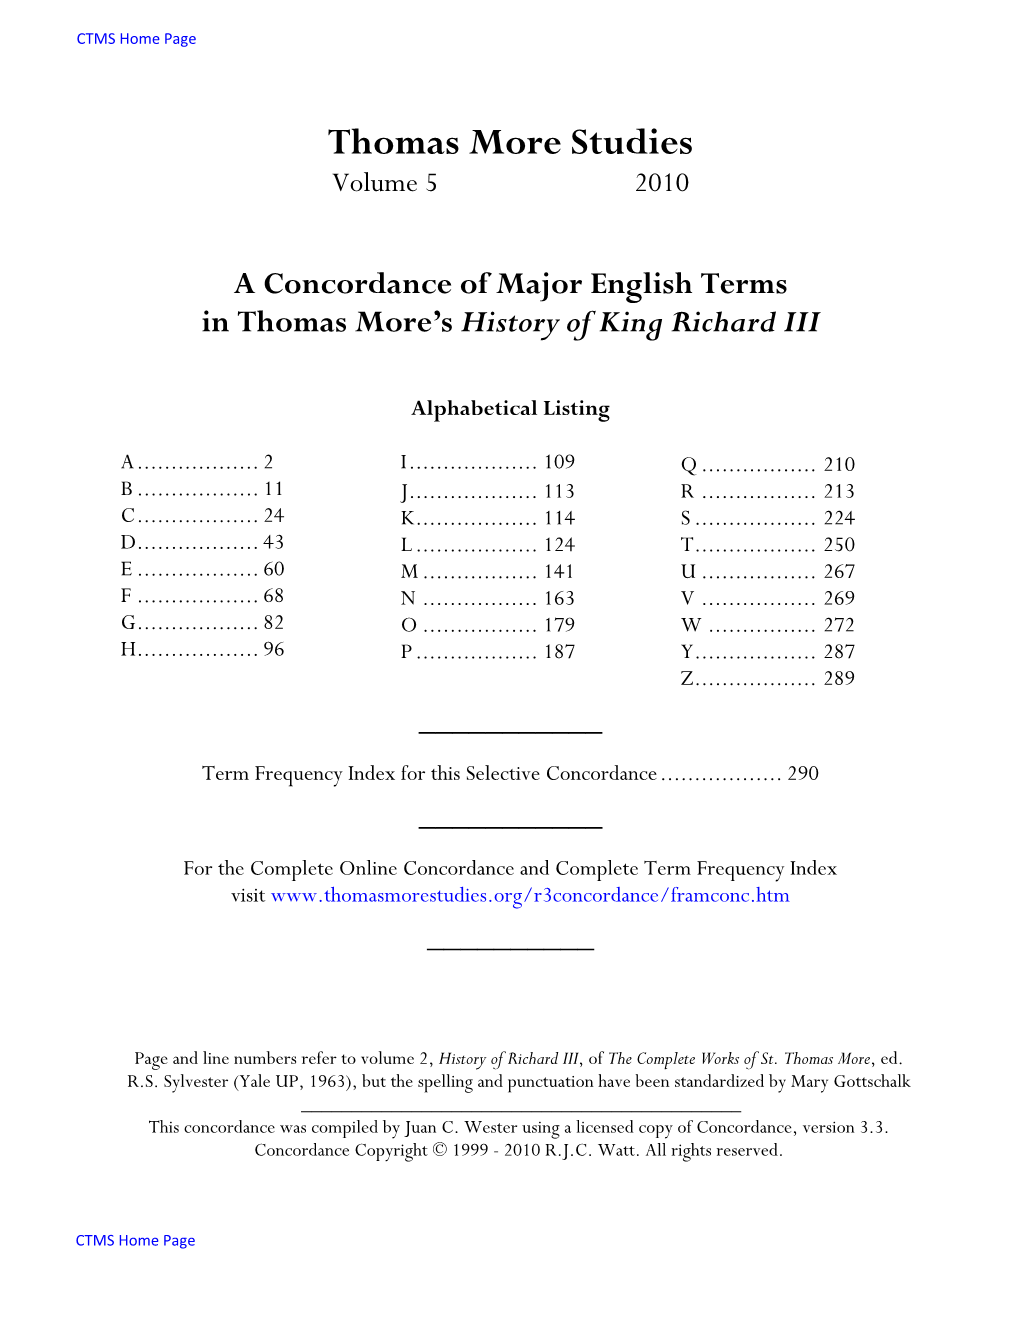 Thomas More Studies 5 (2010): Concordance of Major English